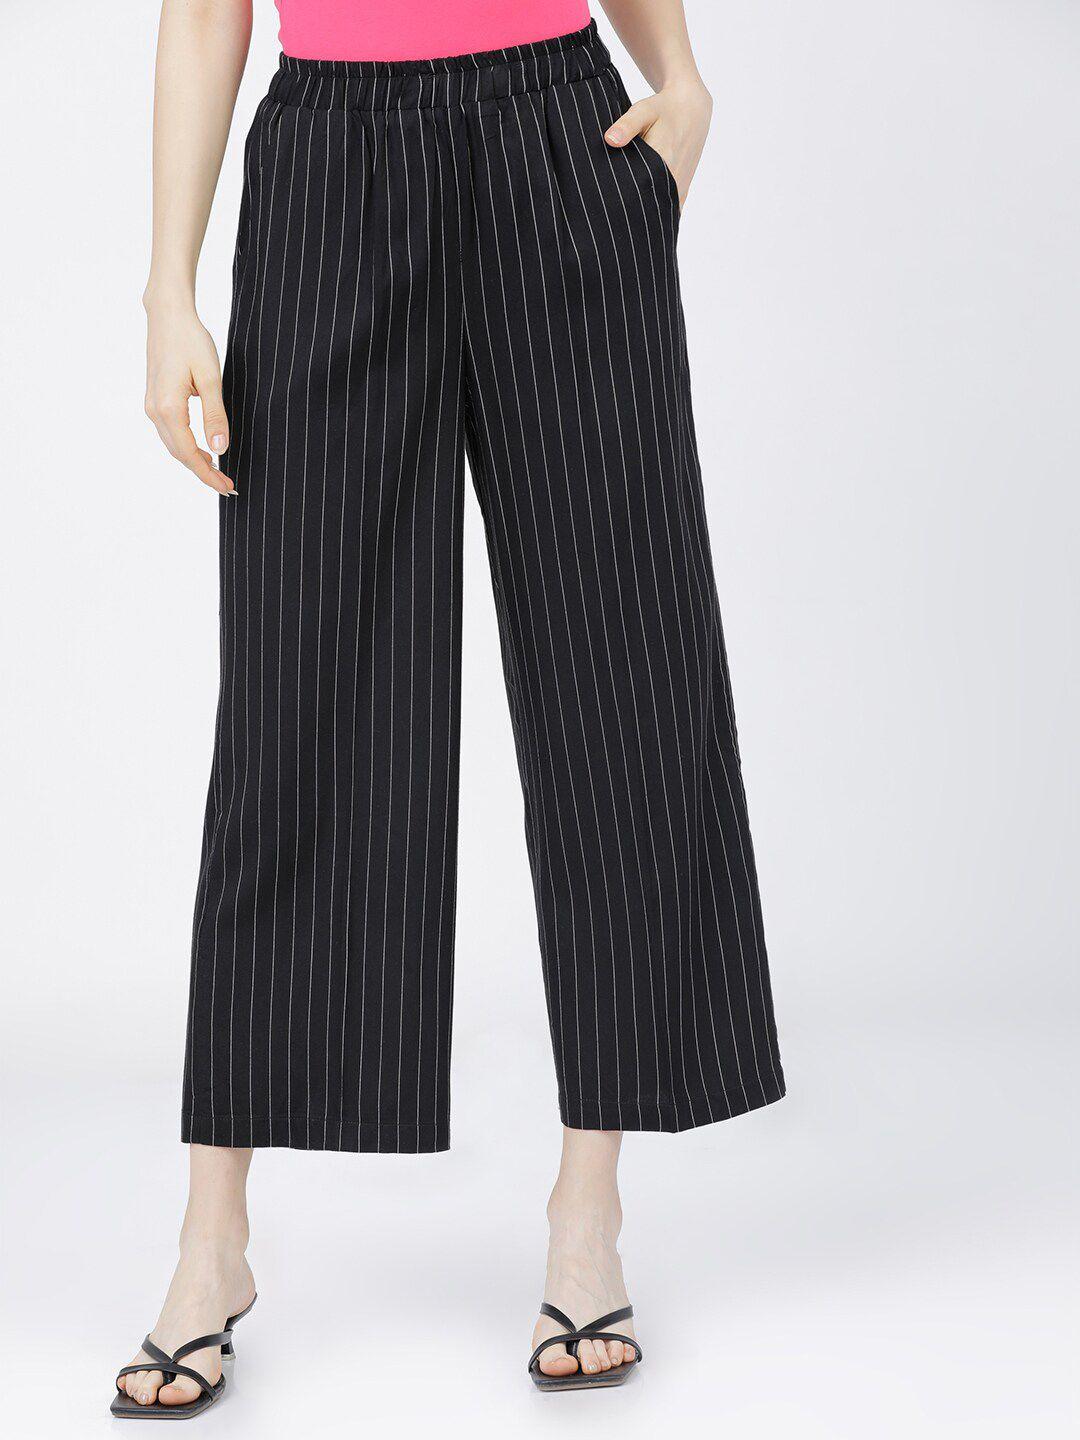 tokyo talkies women black striped slim fit culottes trousers